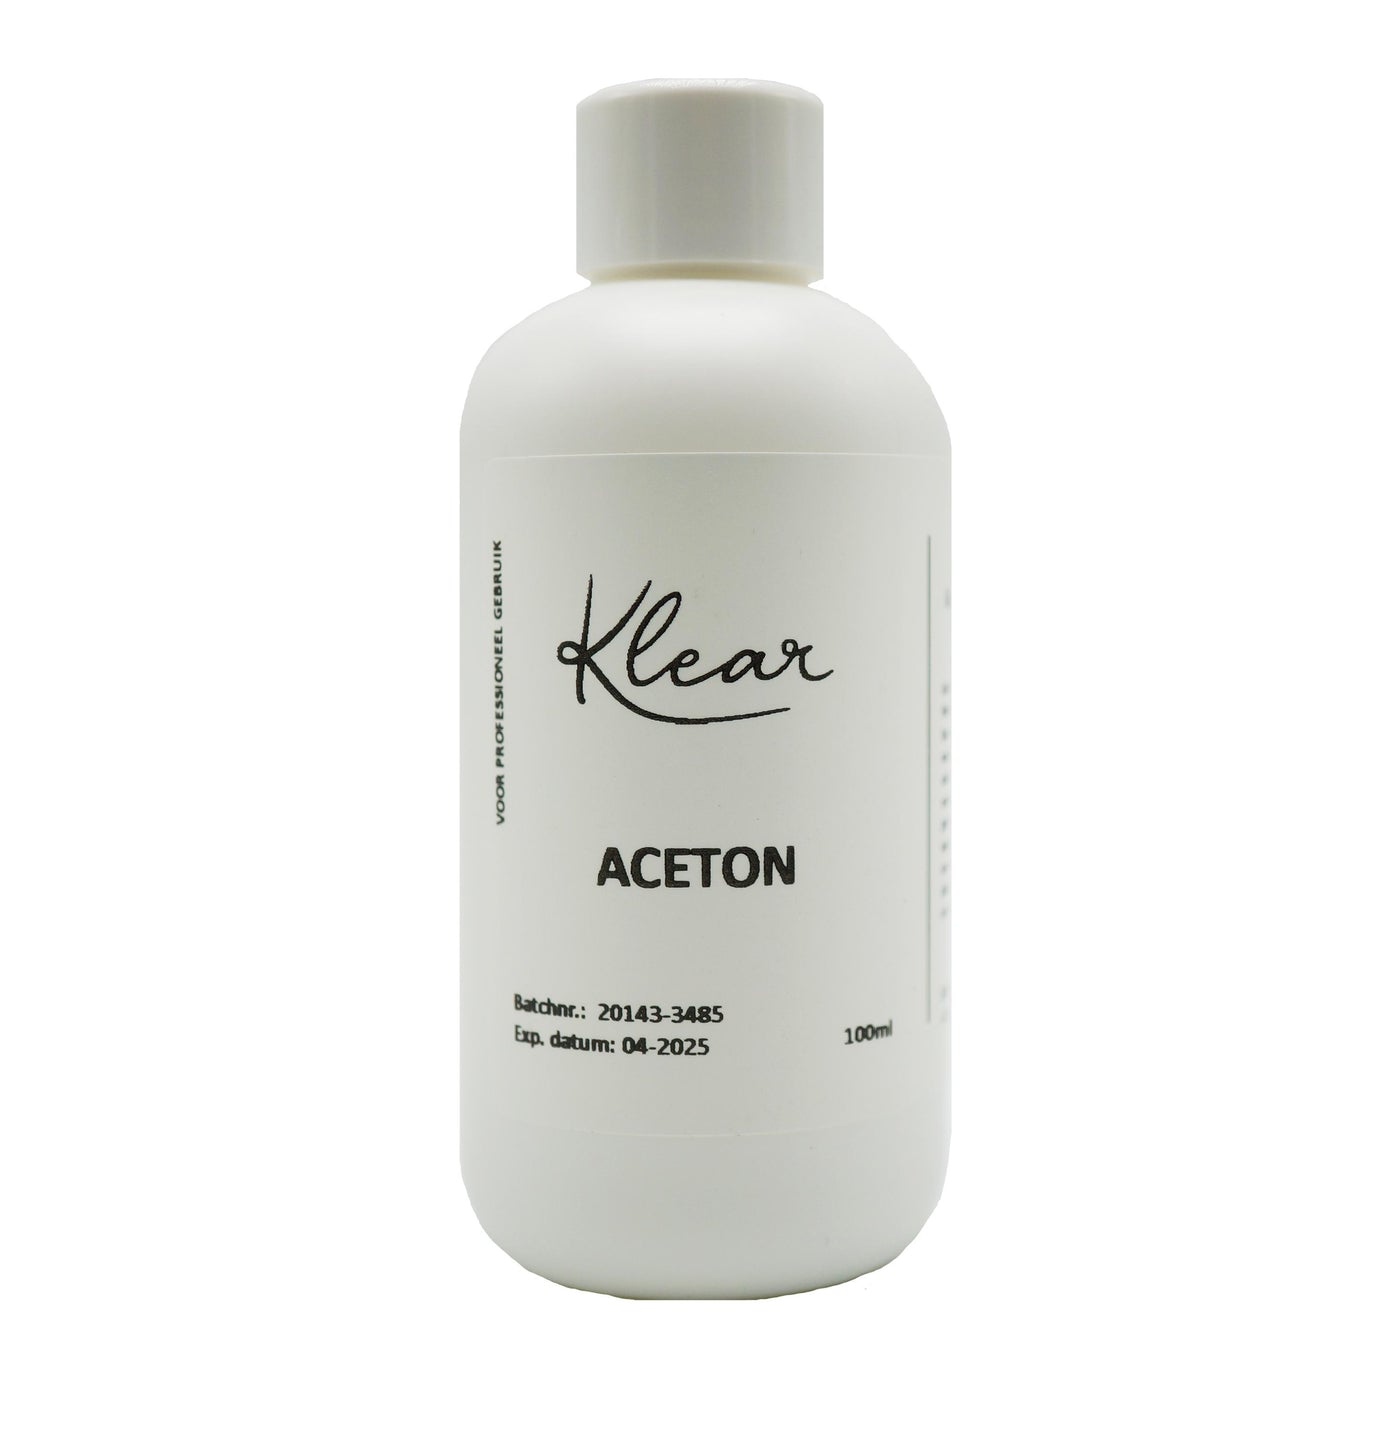 Aceton - Klear